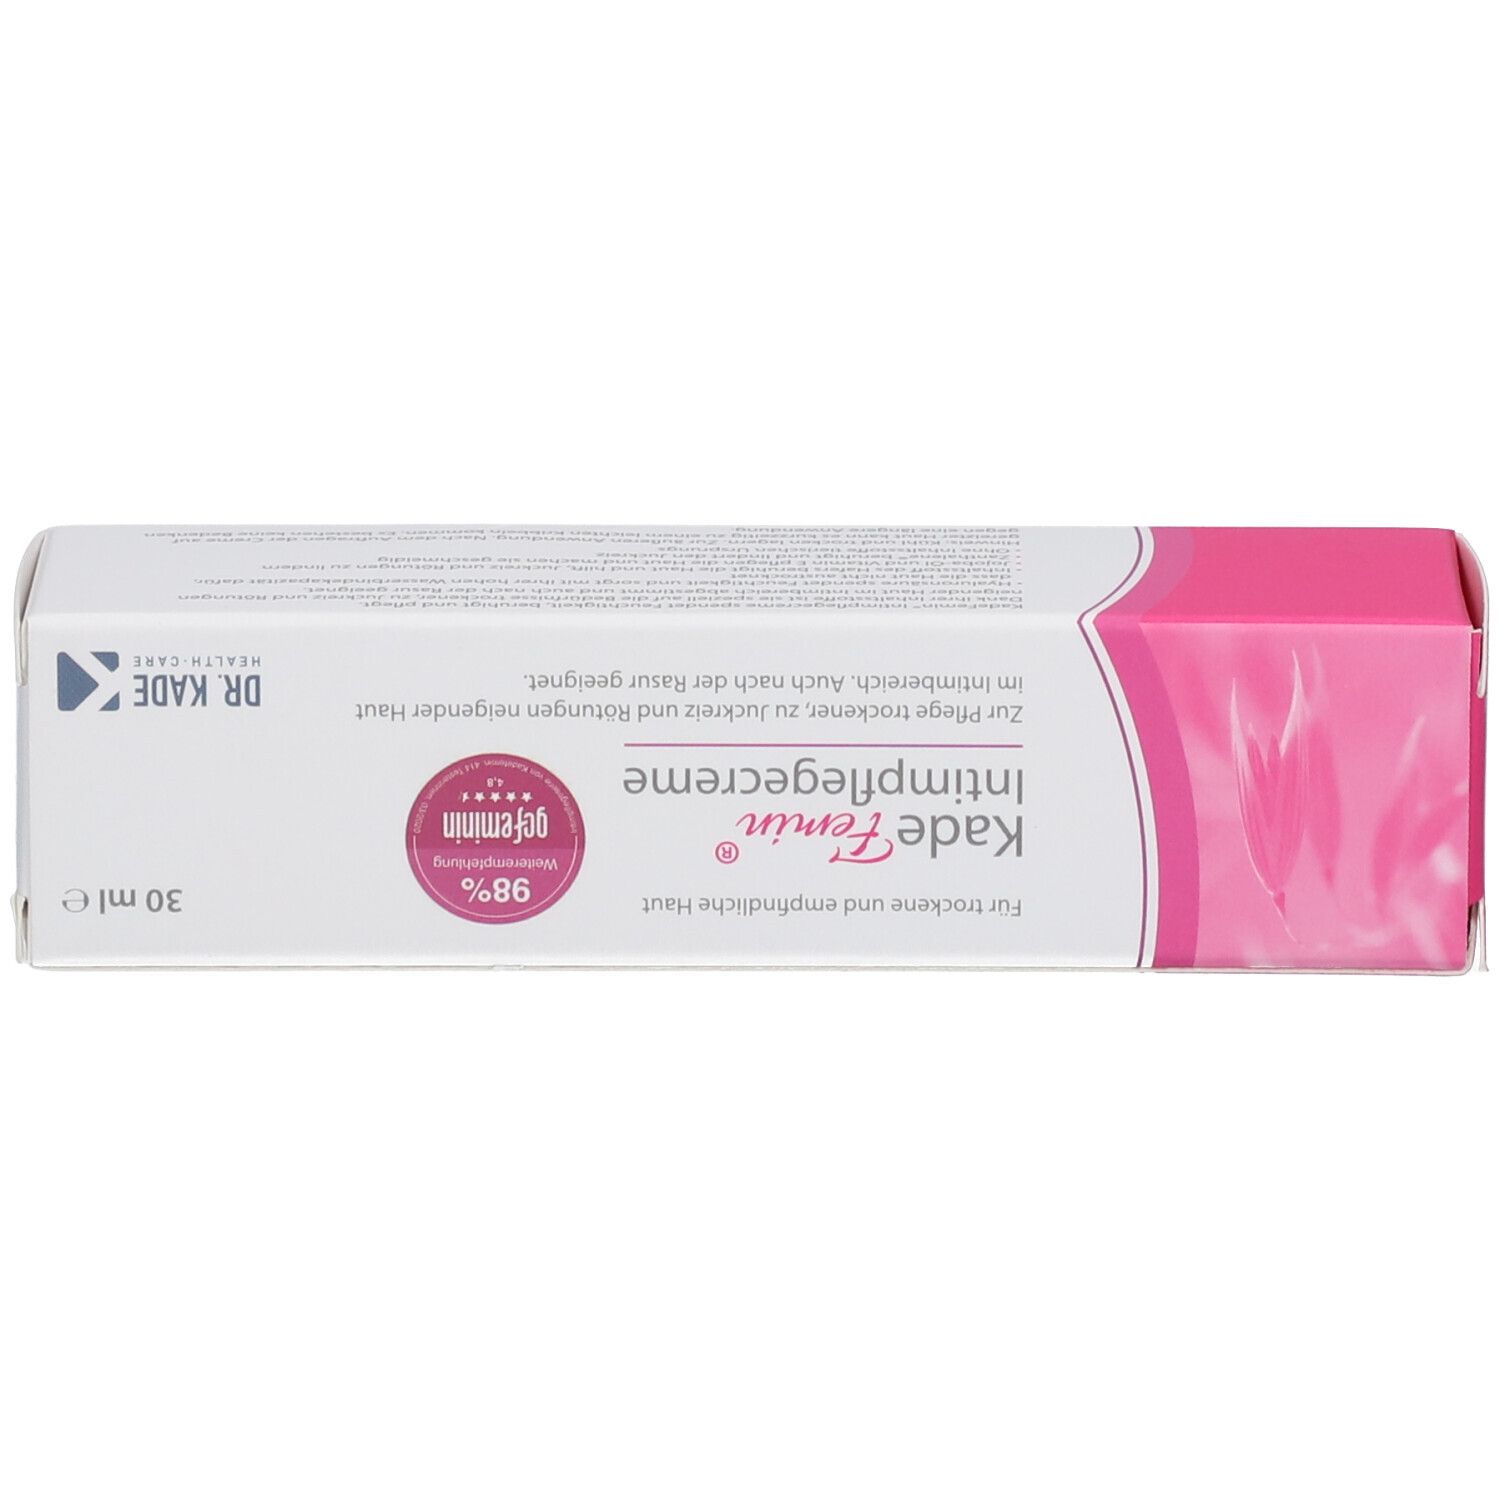 KadeFemin® Intimpflegecreme